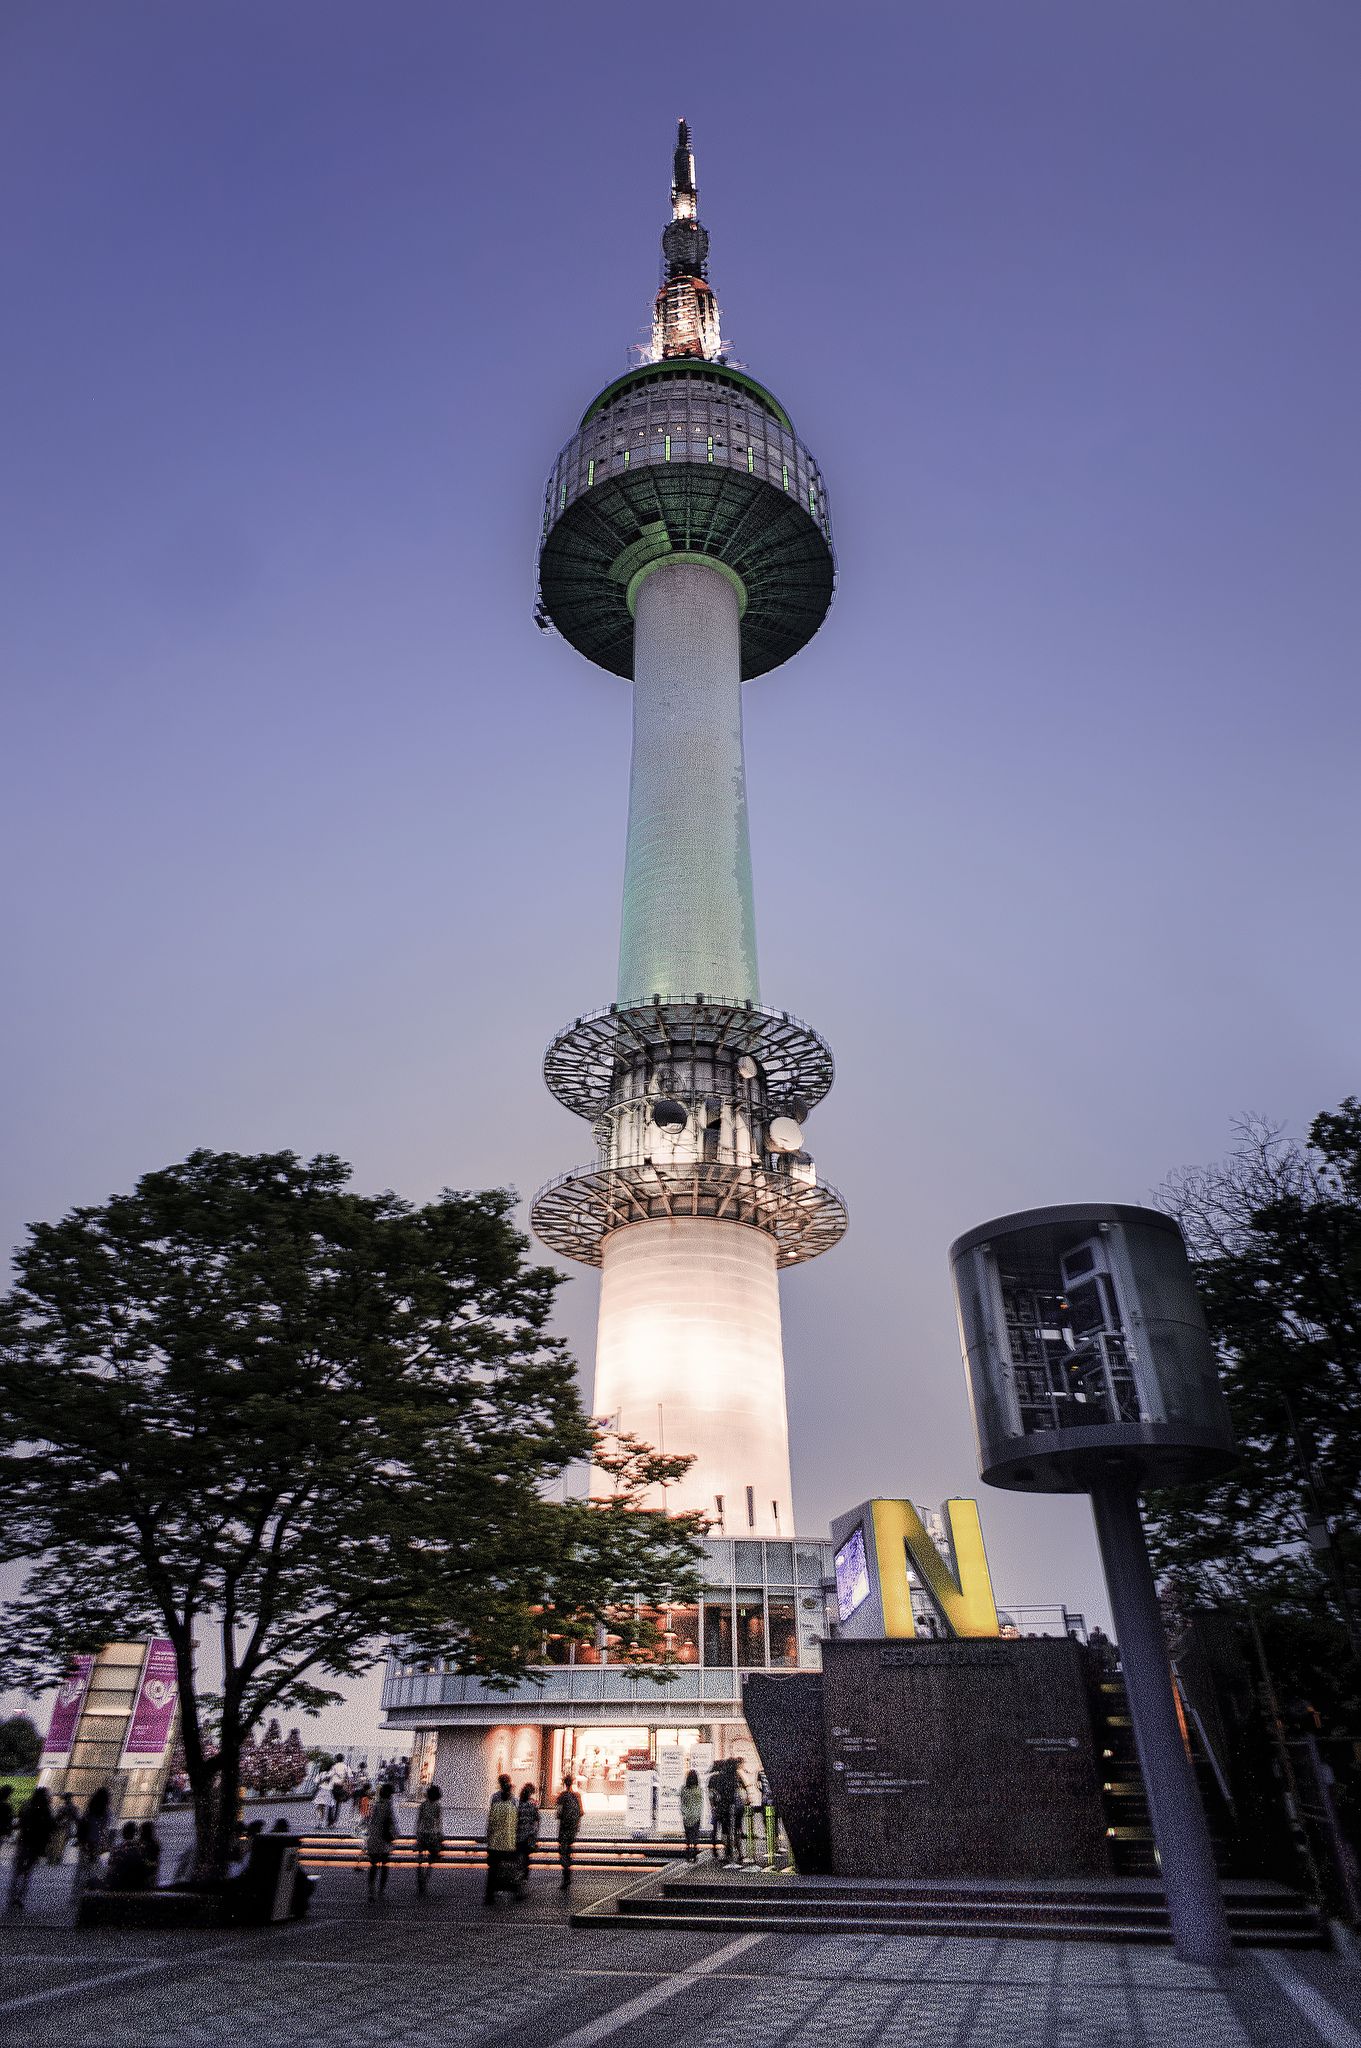 N Seoul Tower on Mt. Namsan. South korea seoul, Seoul tower, Namsan tower